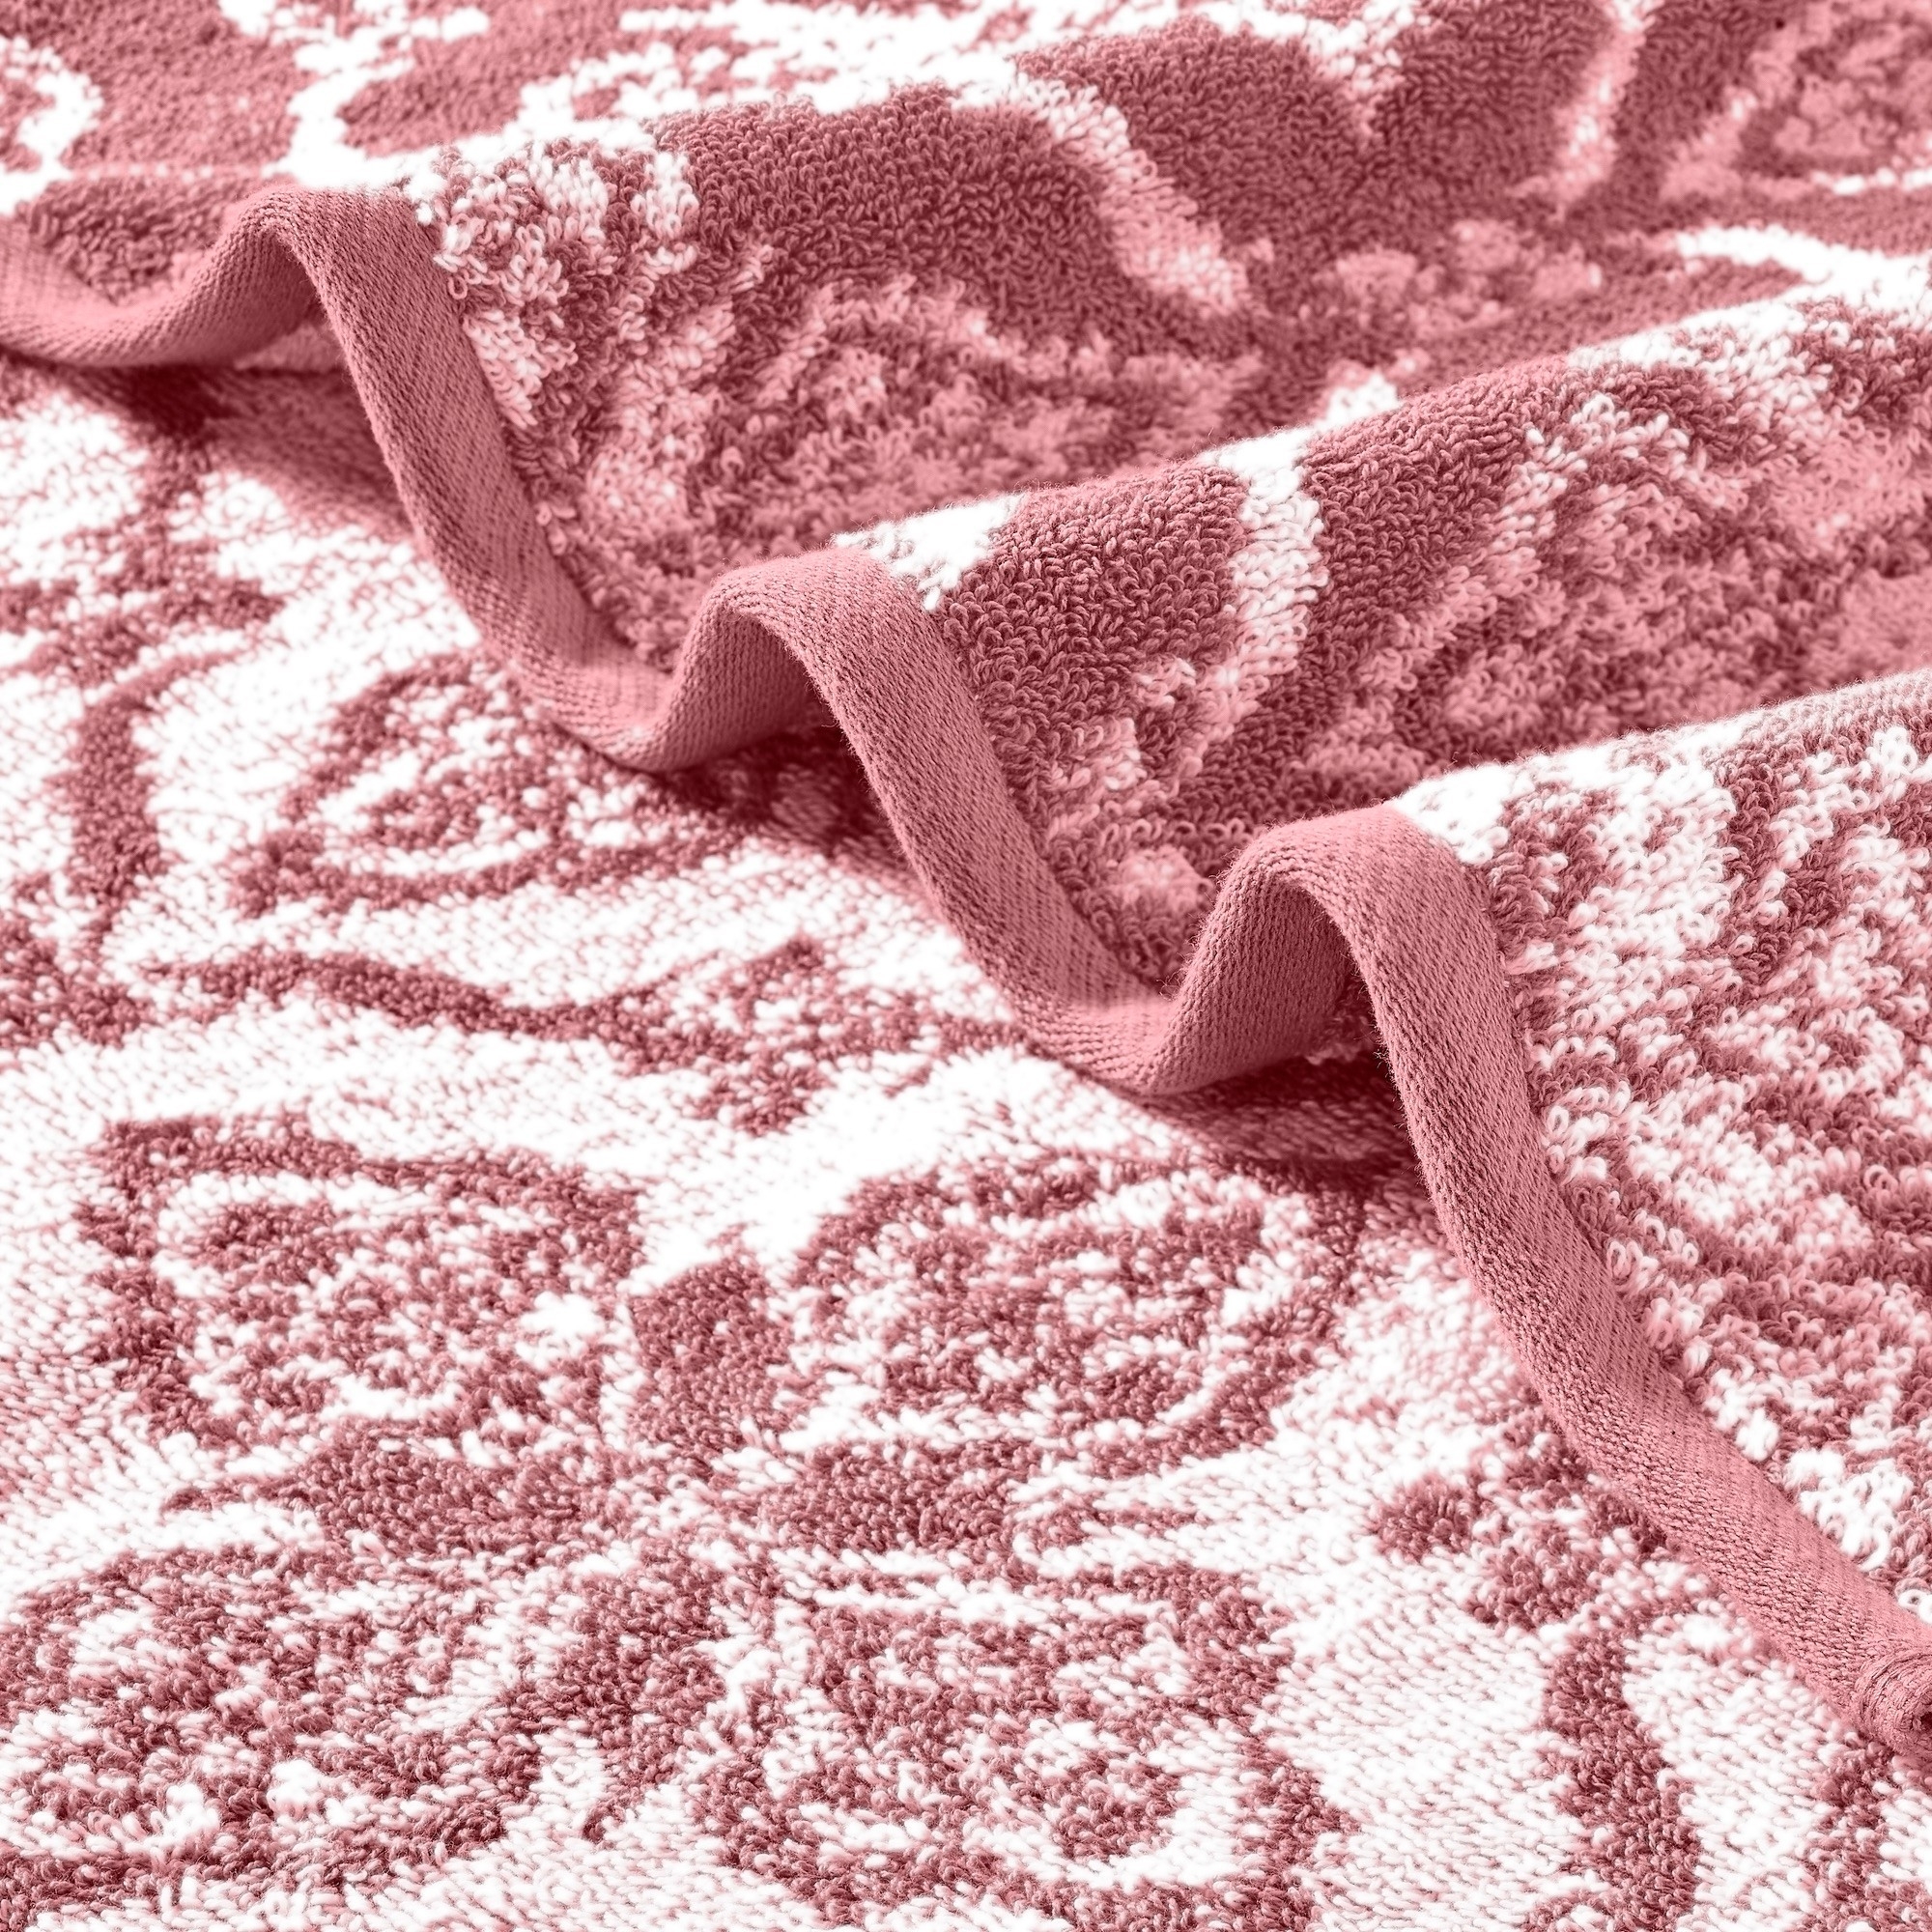 Naja 6pc Cotton Towel Set, Jacquard Pattern, White, Pink By The Urban Port- Saltoro Sherpi